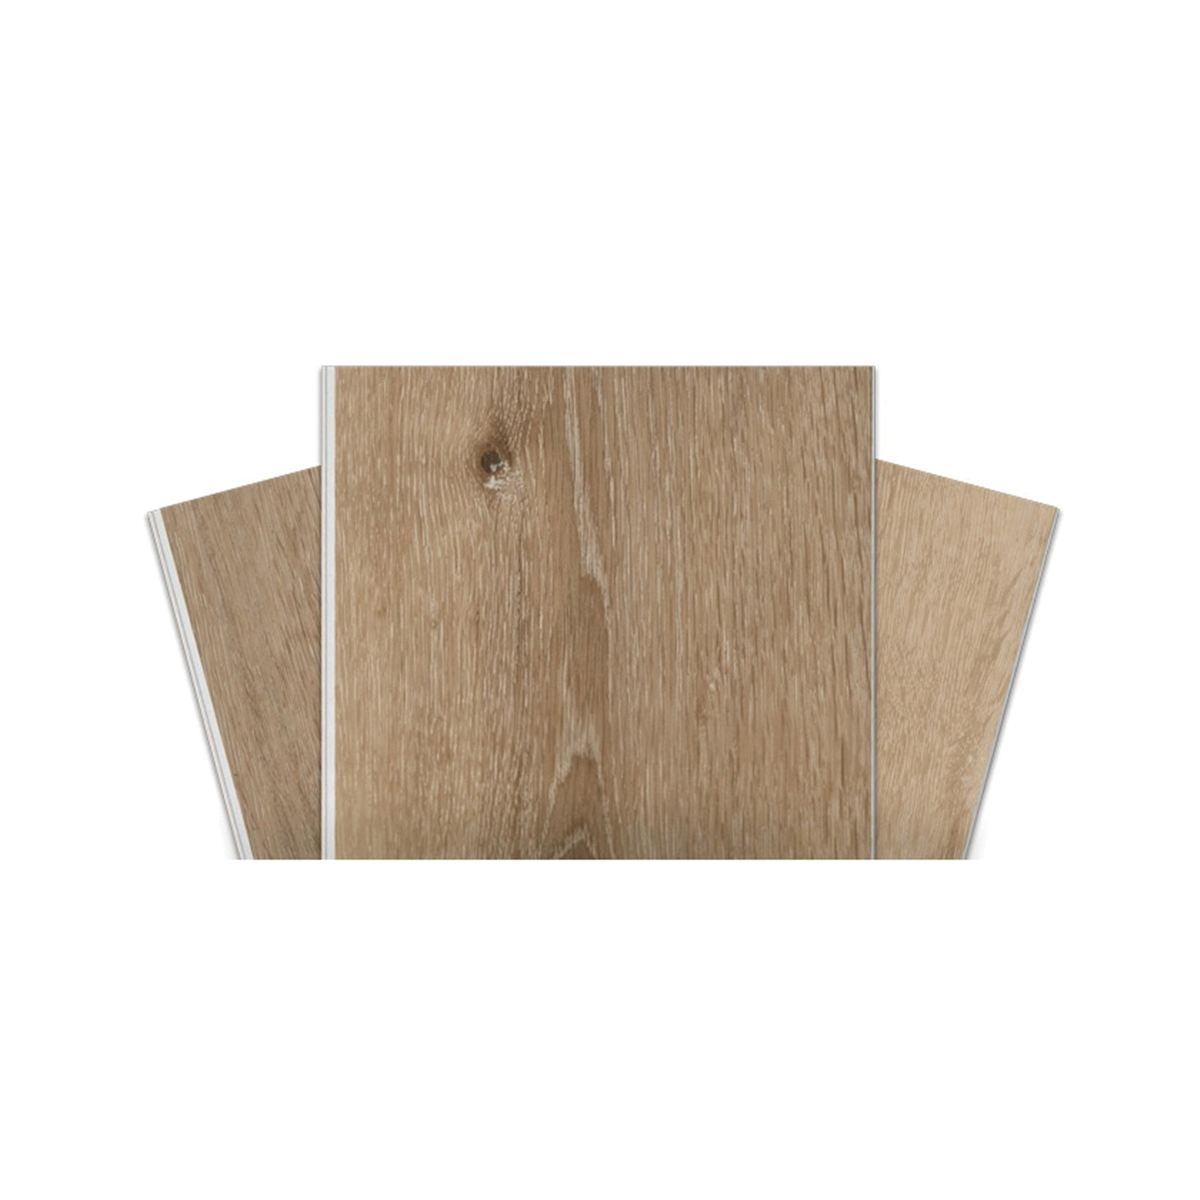 Pro Classic Series 7904109500 Plank Flooring, 48 in L, 7-1/8 in W, Micro Beveled Edge, Wood Grain Pattern, Vinyl